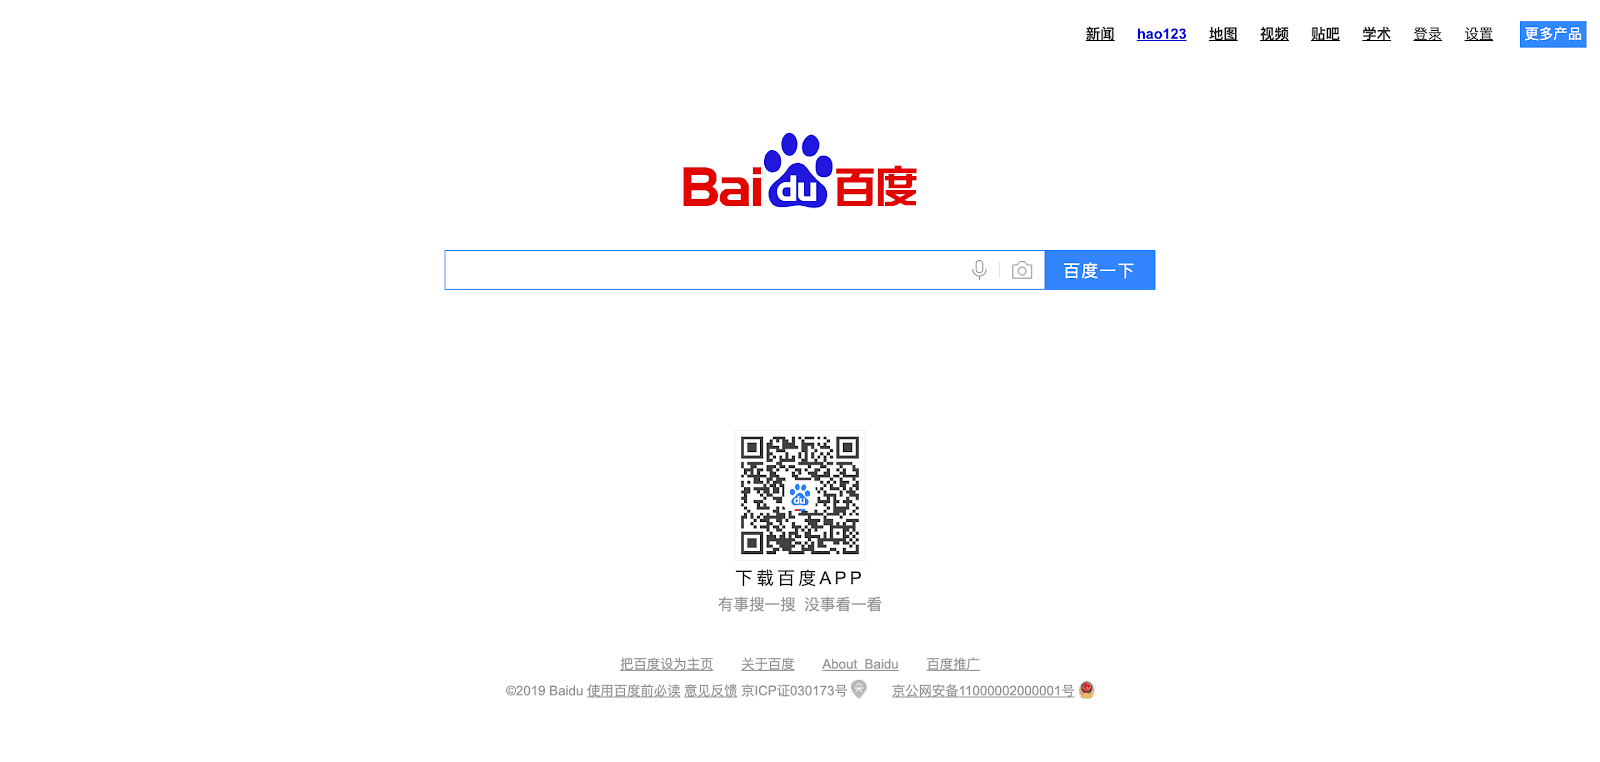 Baidu search engine screenshot